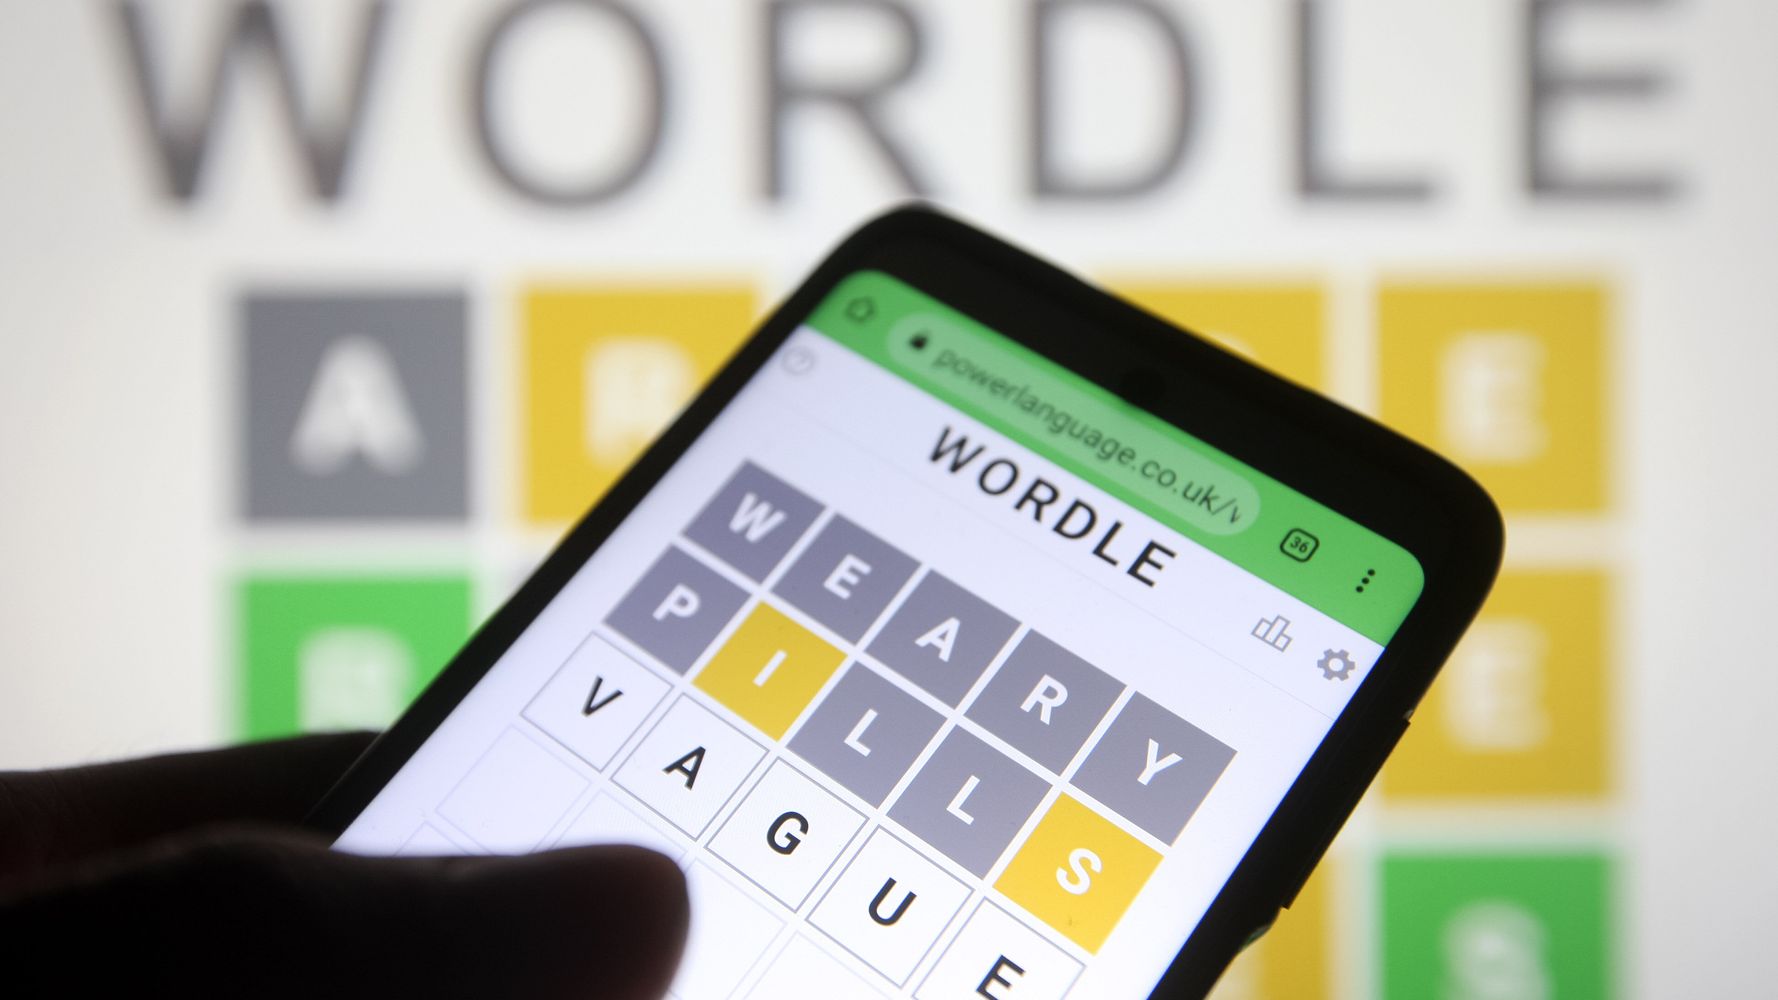 Wordle word games